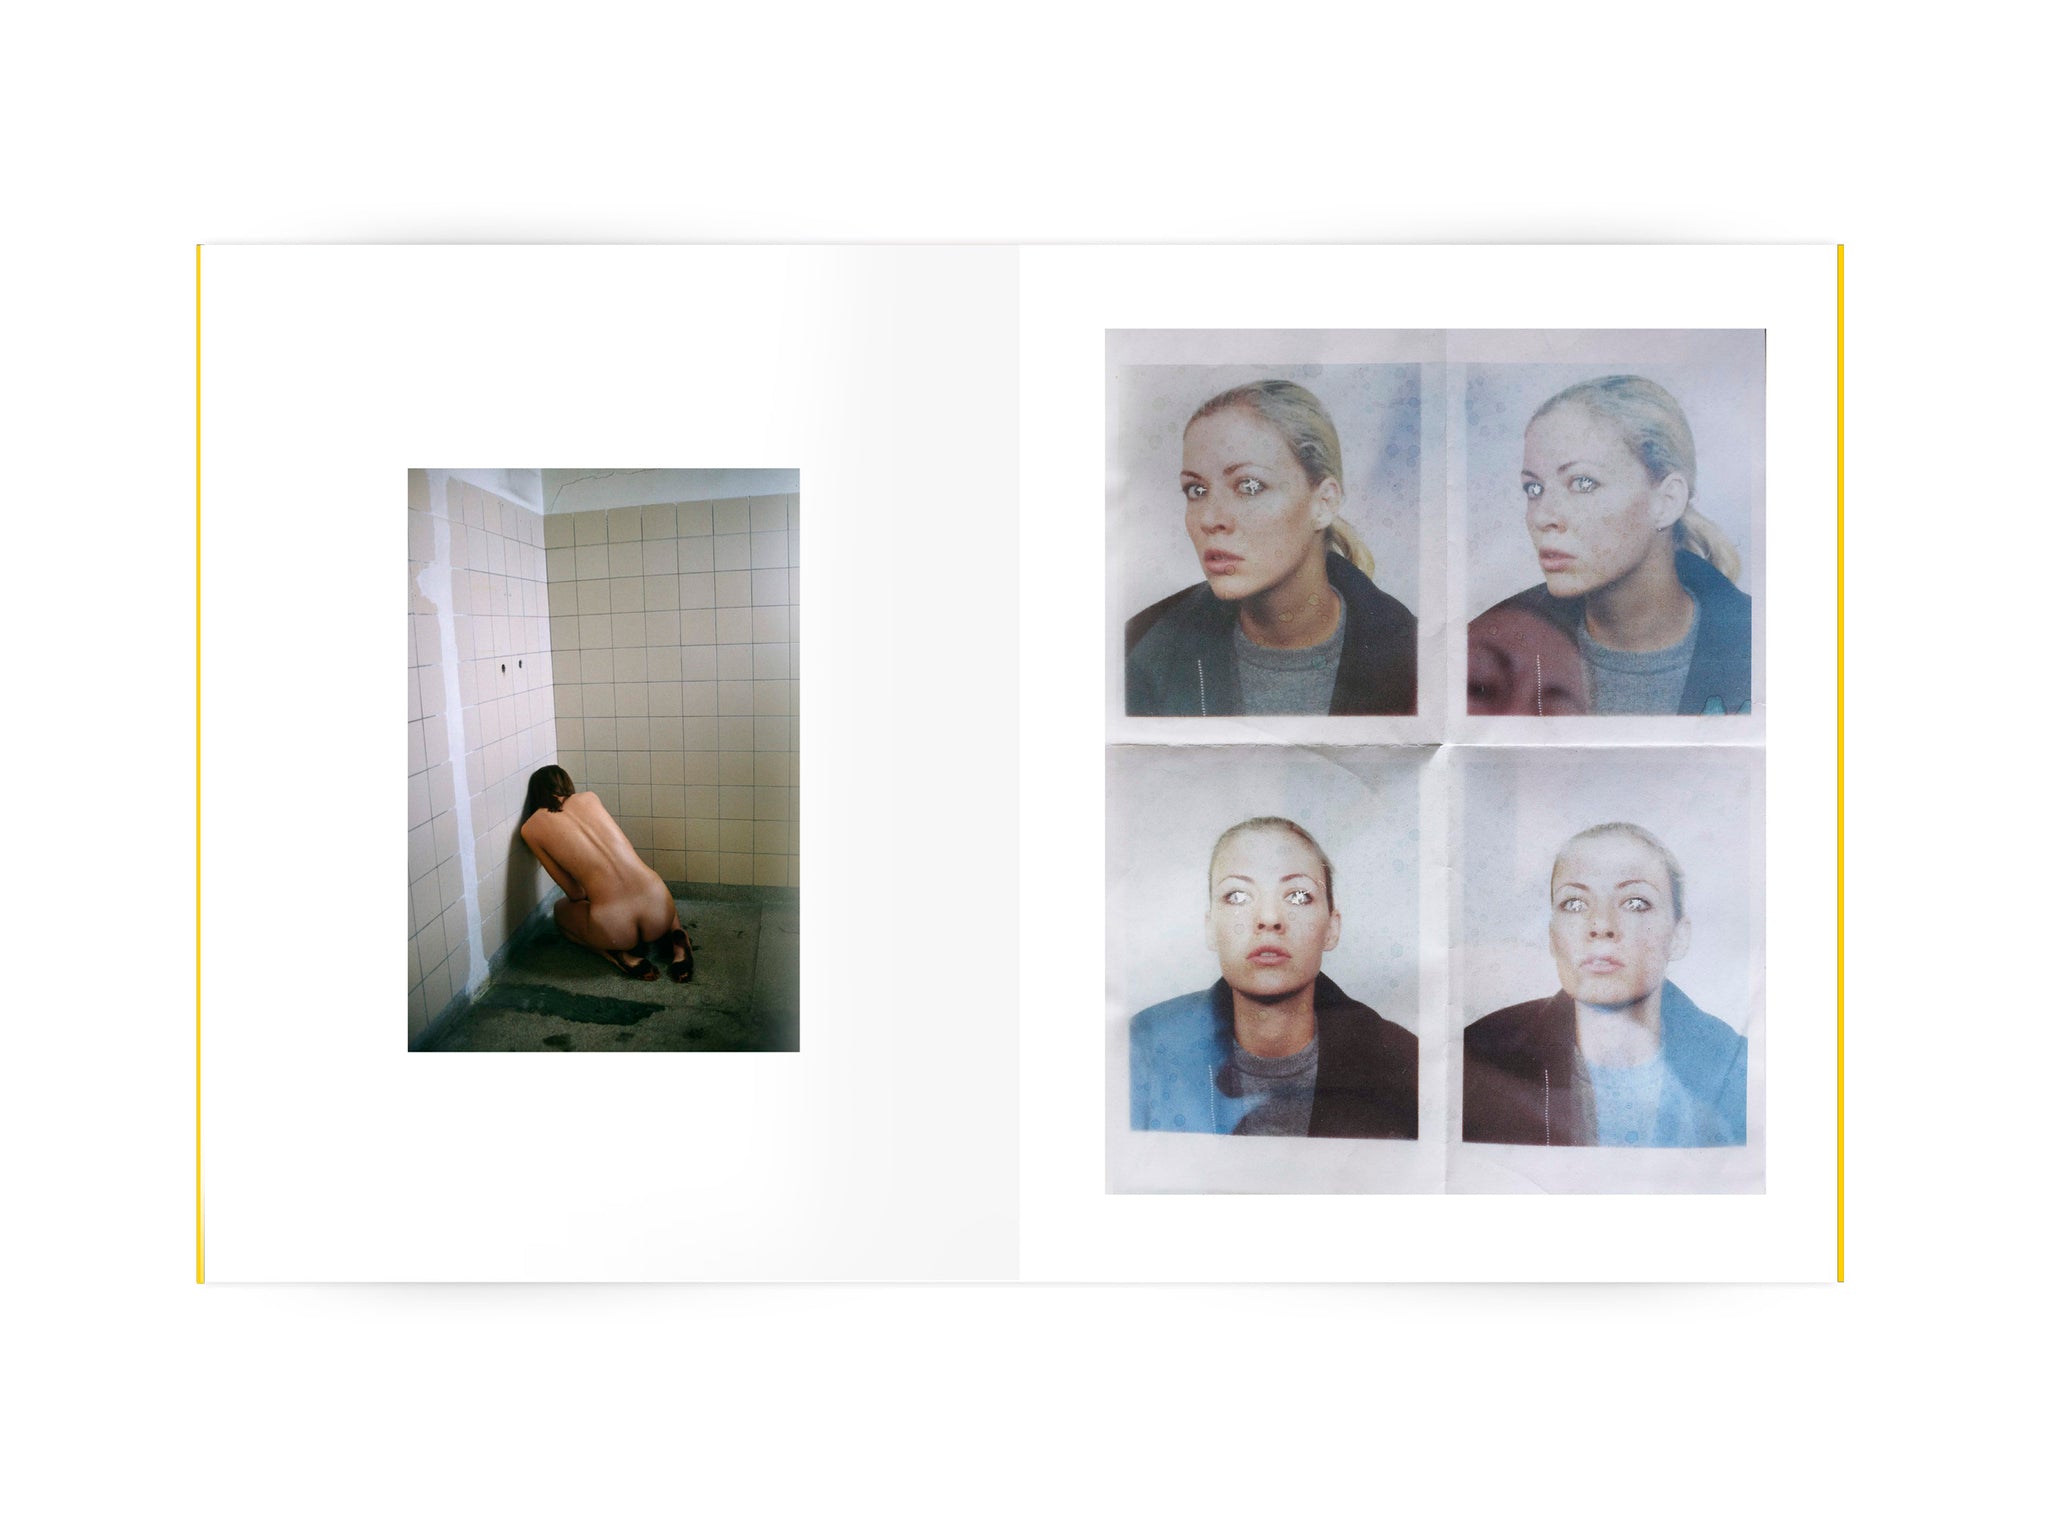 Photography Exhibition - Viviane Sassen: Umbra